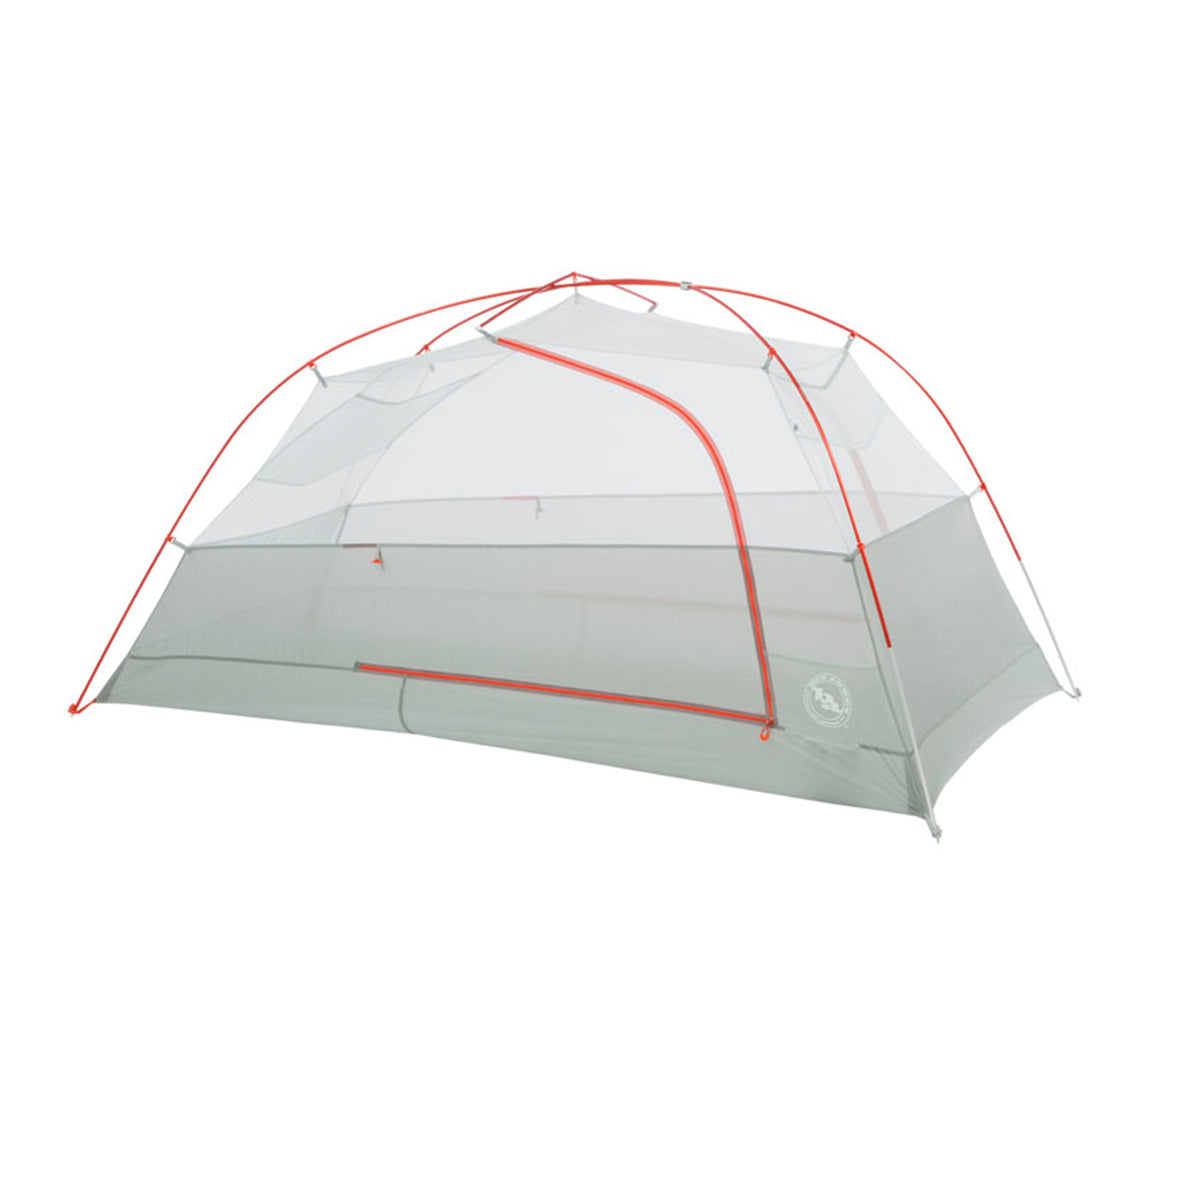 Big Agnes Copper Spur HV UL 2 Person Tent by Big Agnes | Camping - goHUNT Shop